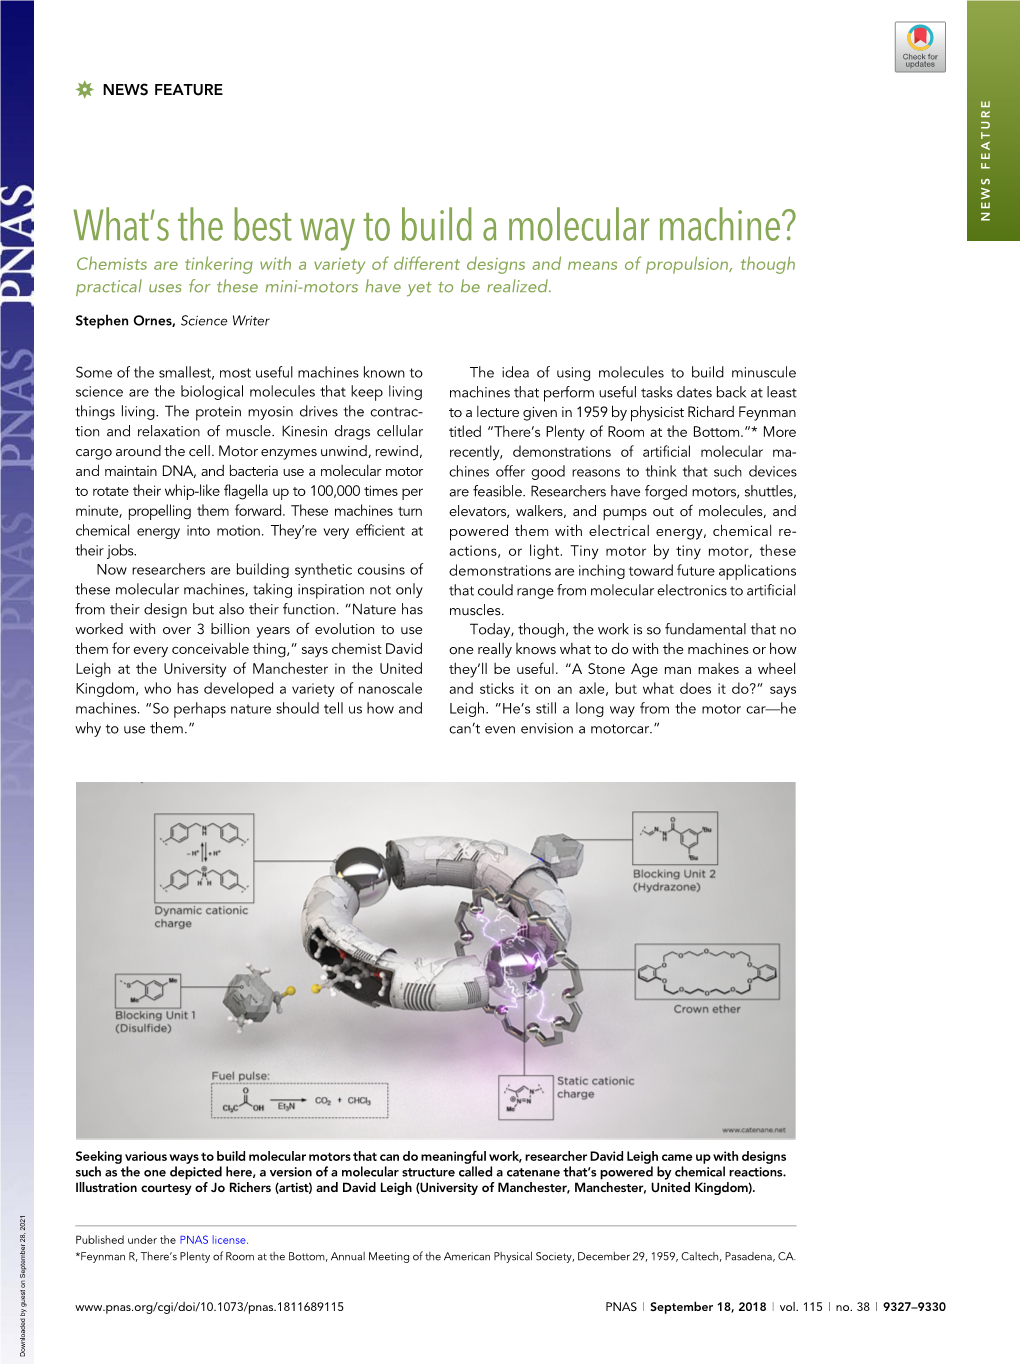 What's the Best Way to Build a Molecular Machine?